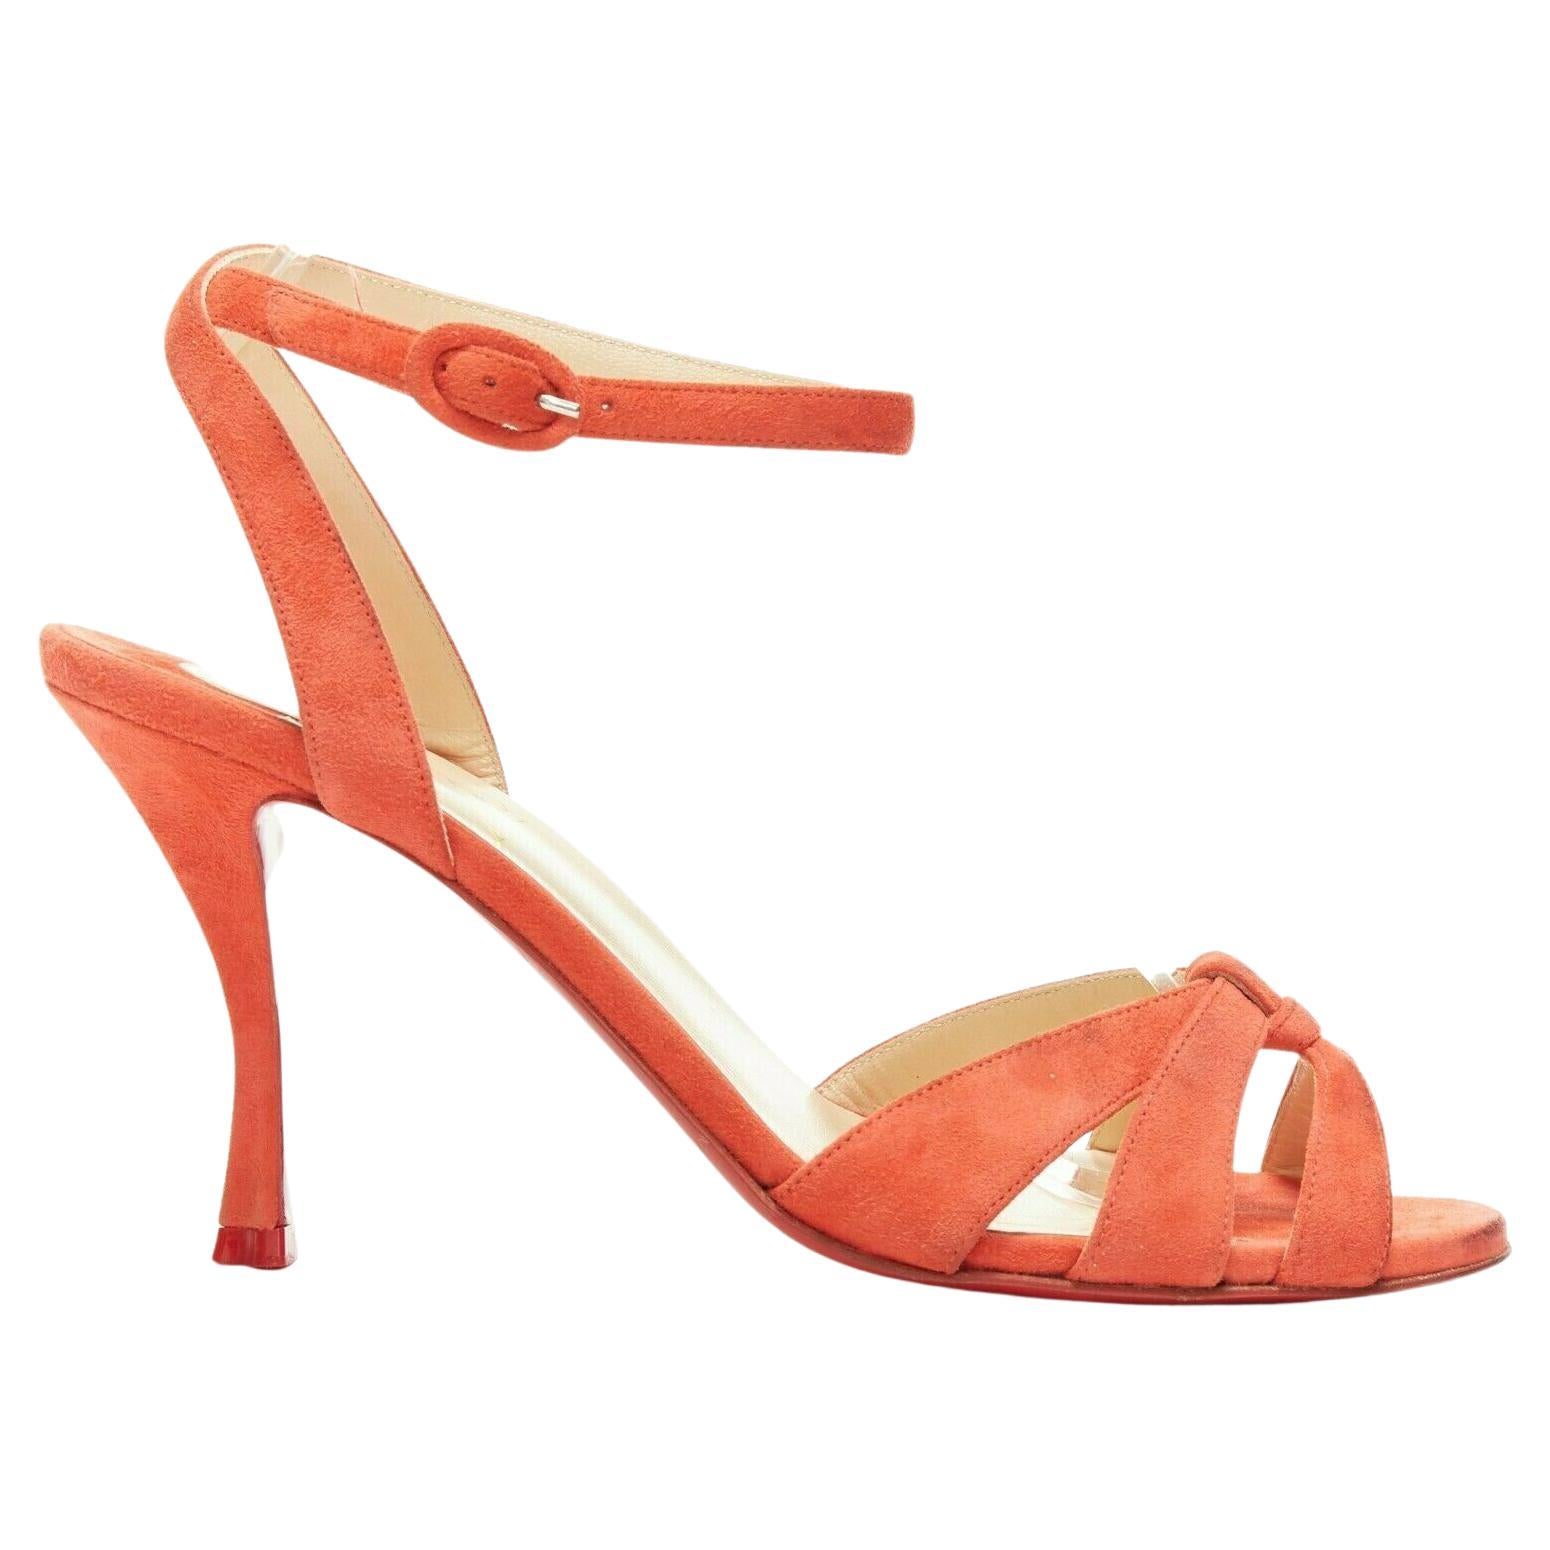 Buy Stepee Women's Comfortable Stylish Designer Block Heel Sandals (Pink,  numeric_3) at Amazon.in